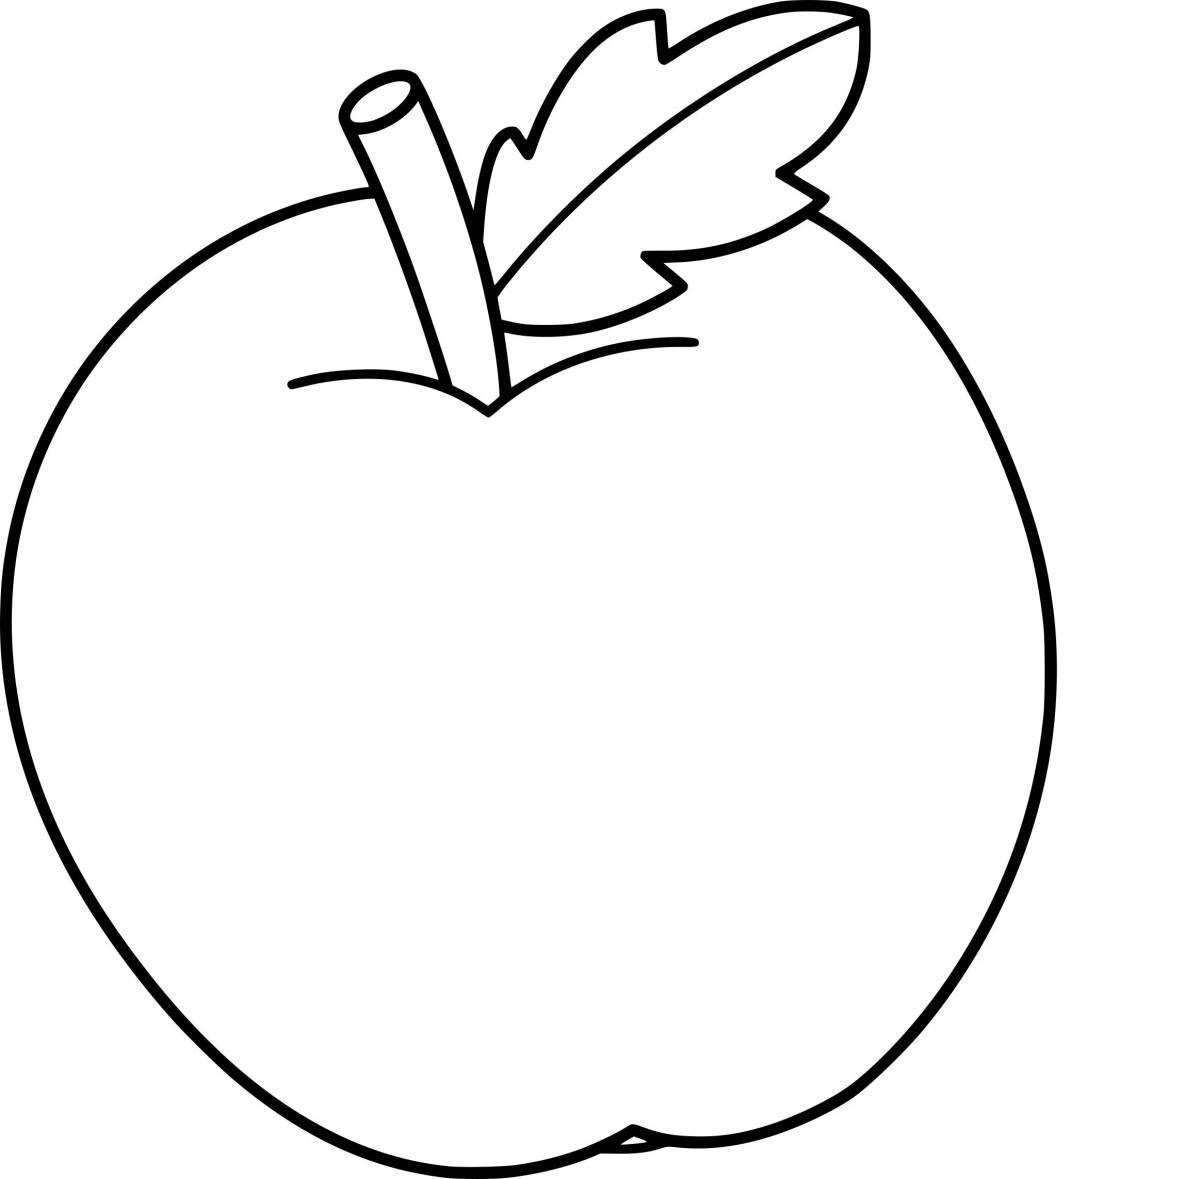 Fun apple pear coloring book